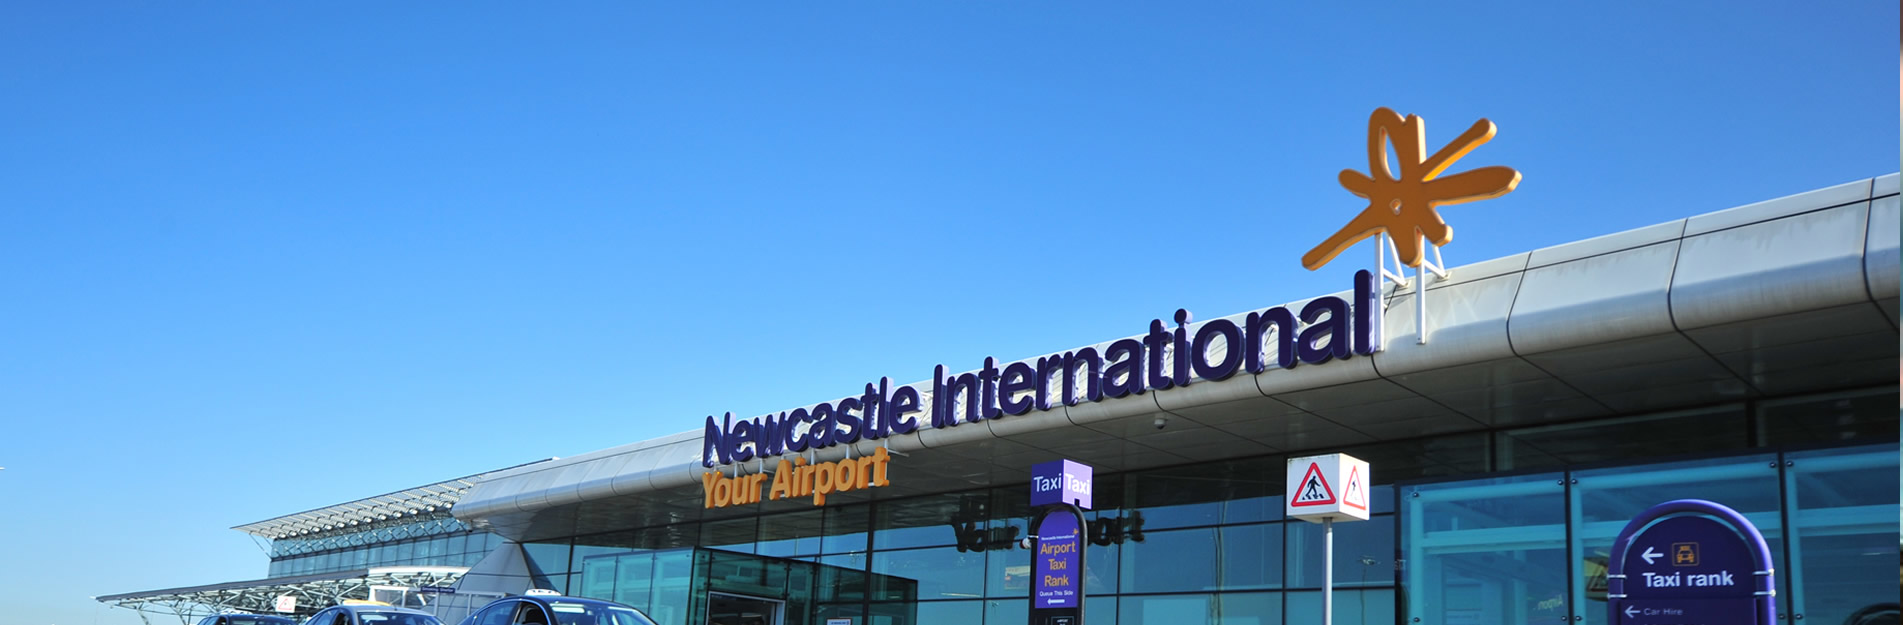 Newcastle Airport Commences Major Security Development